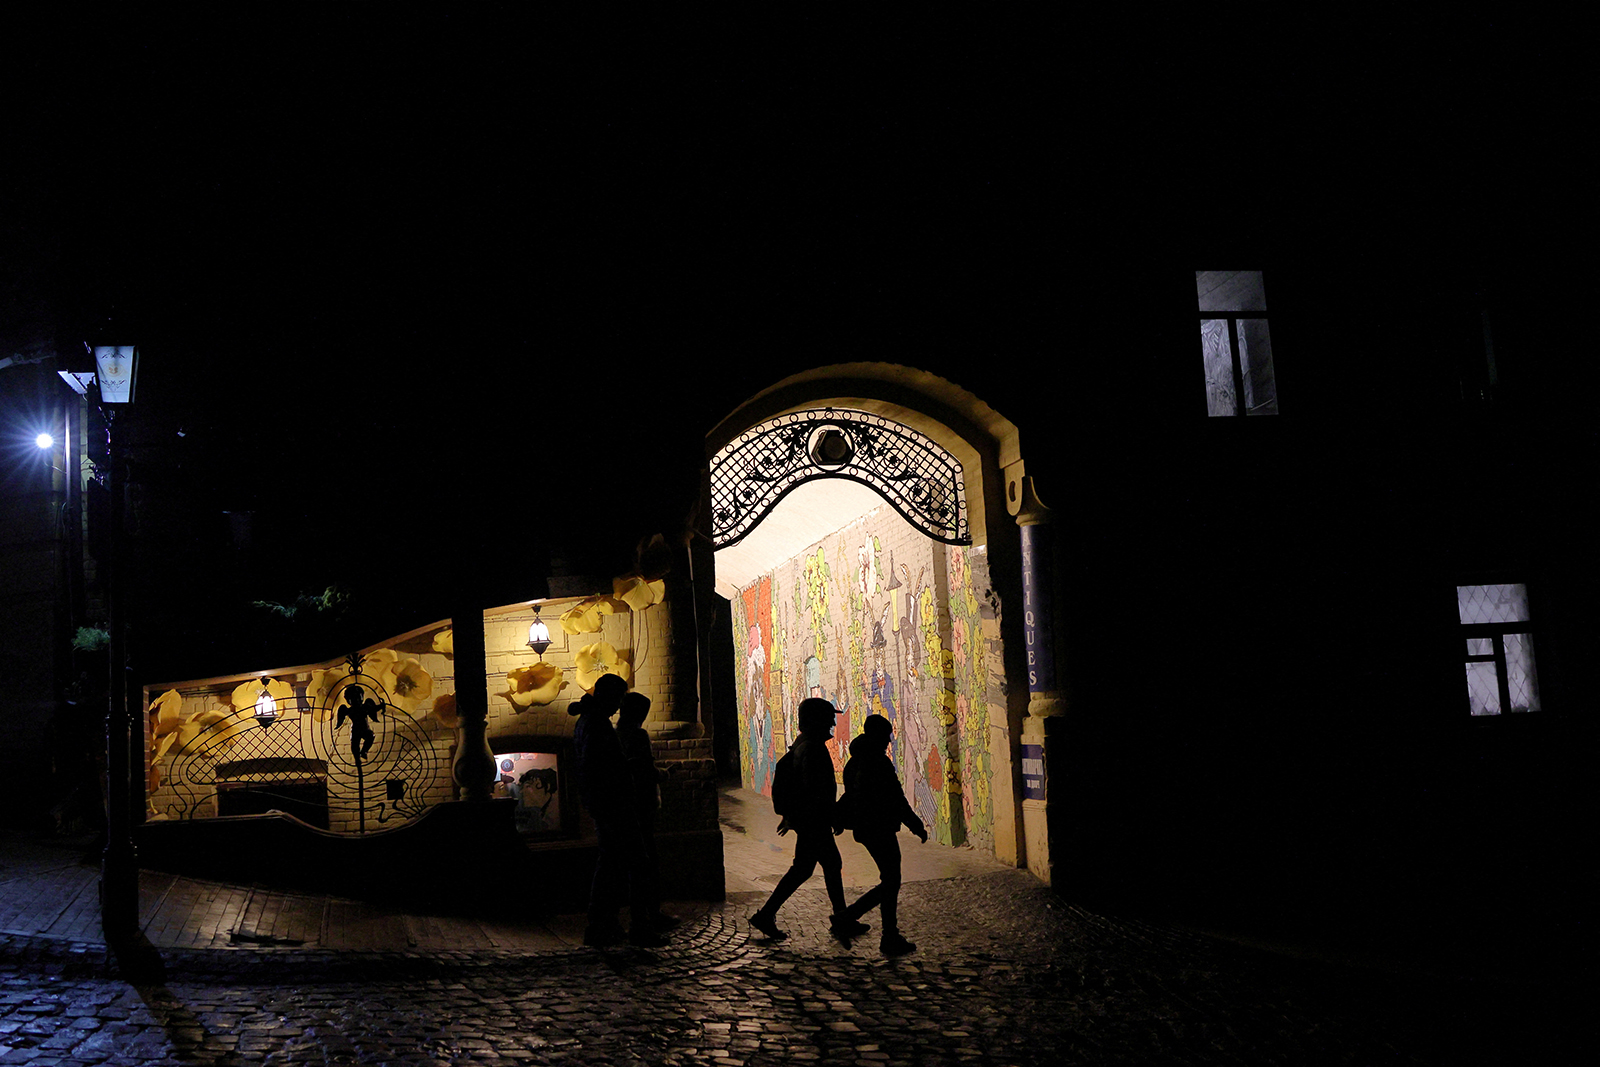 People walk on a dark street in the old town of Kyiv, Ukraine, on November 6.